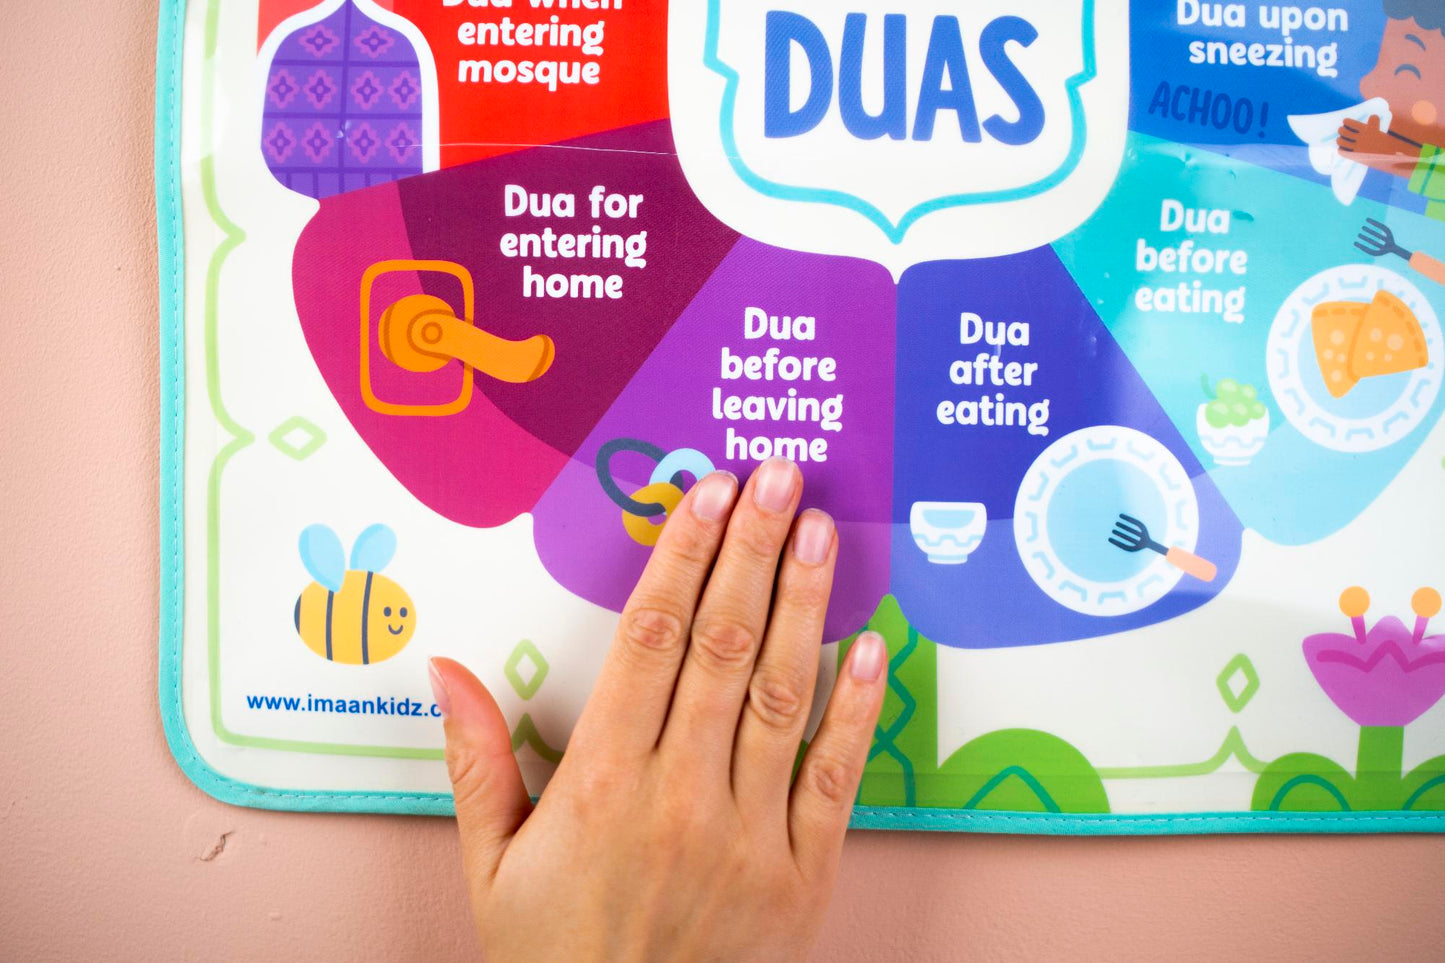 My Daily Duas - Interactive Talking Poster